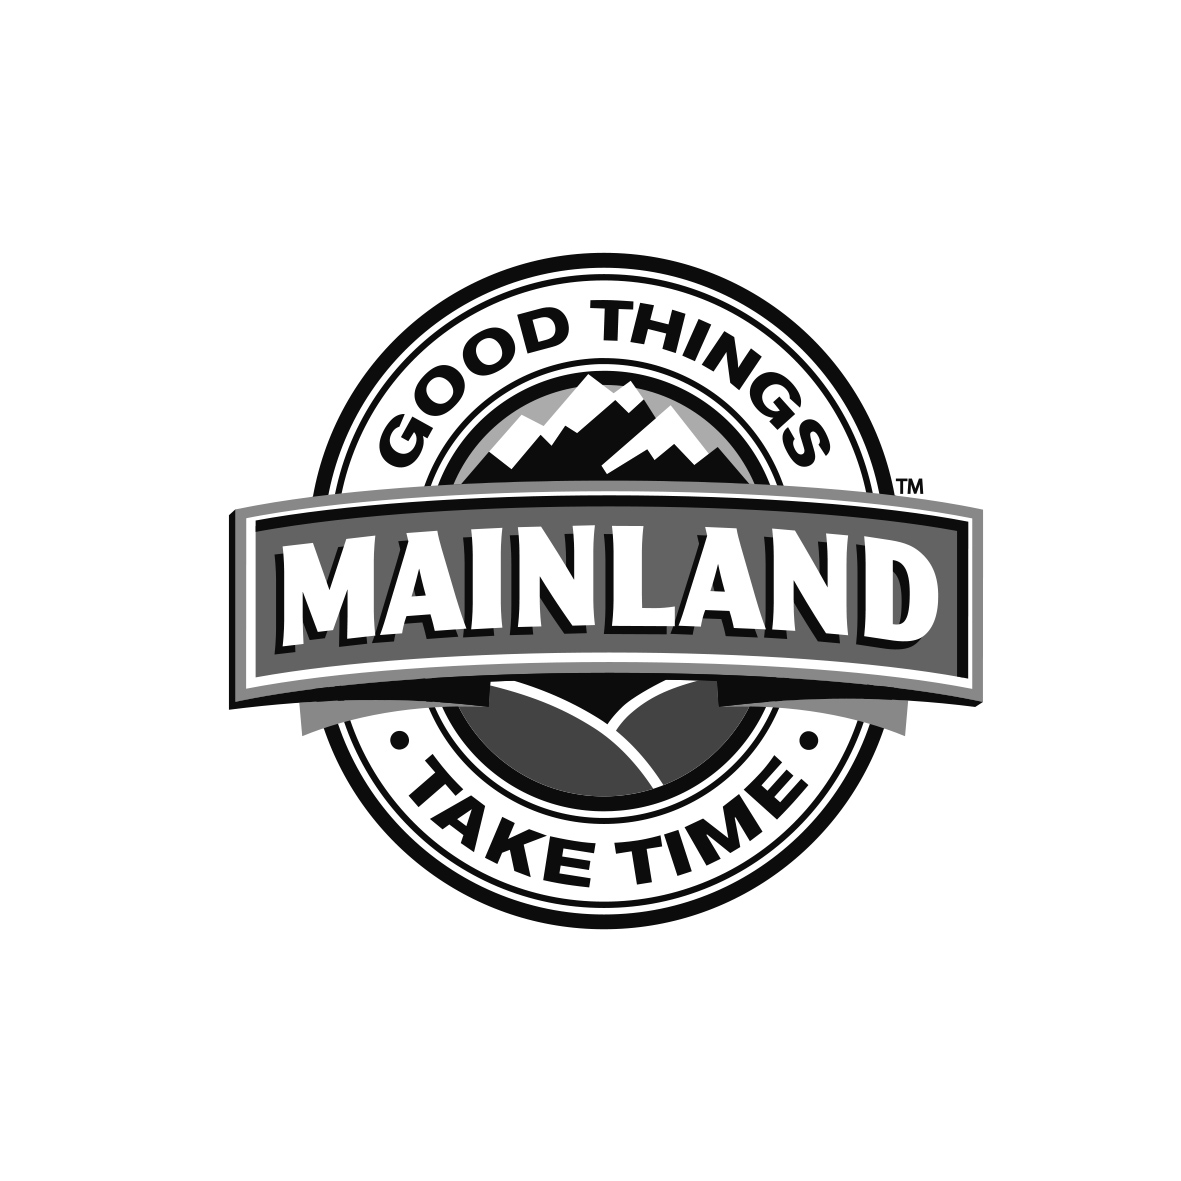 Mainland logo